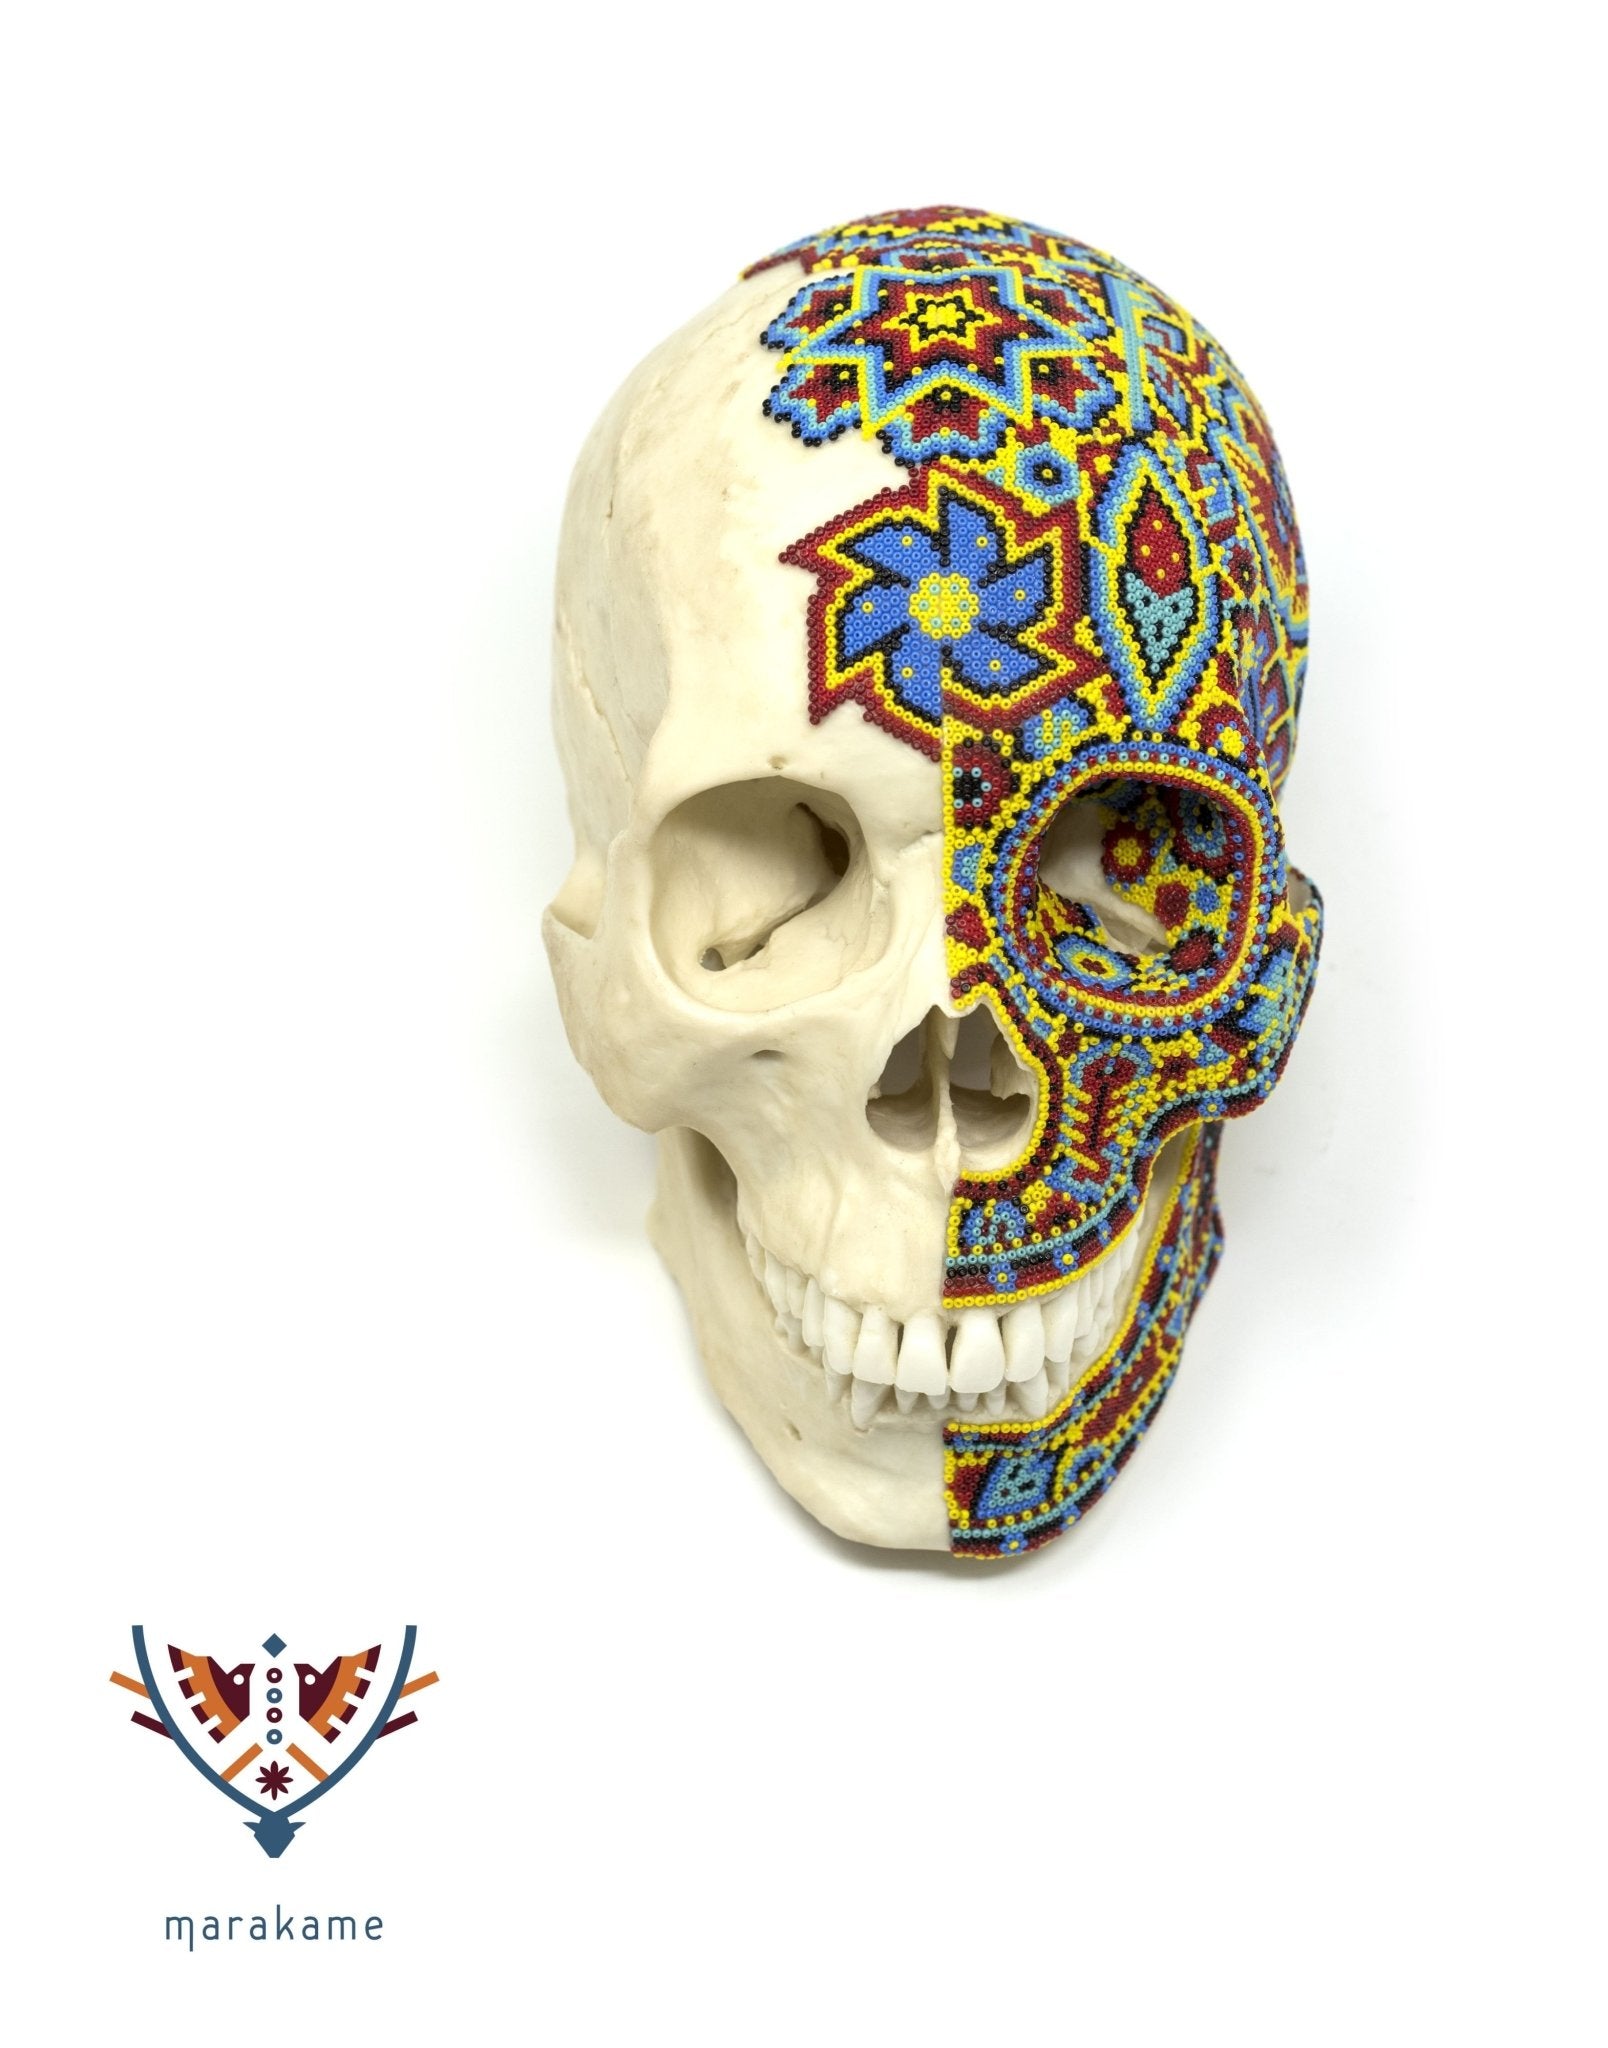 Cráneo Hiperrealista de Humano escala real "Wirikuta" - Arte Huichol - Marakame